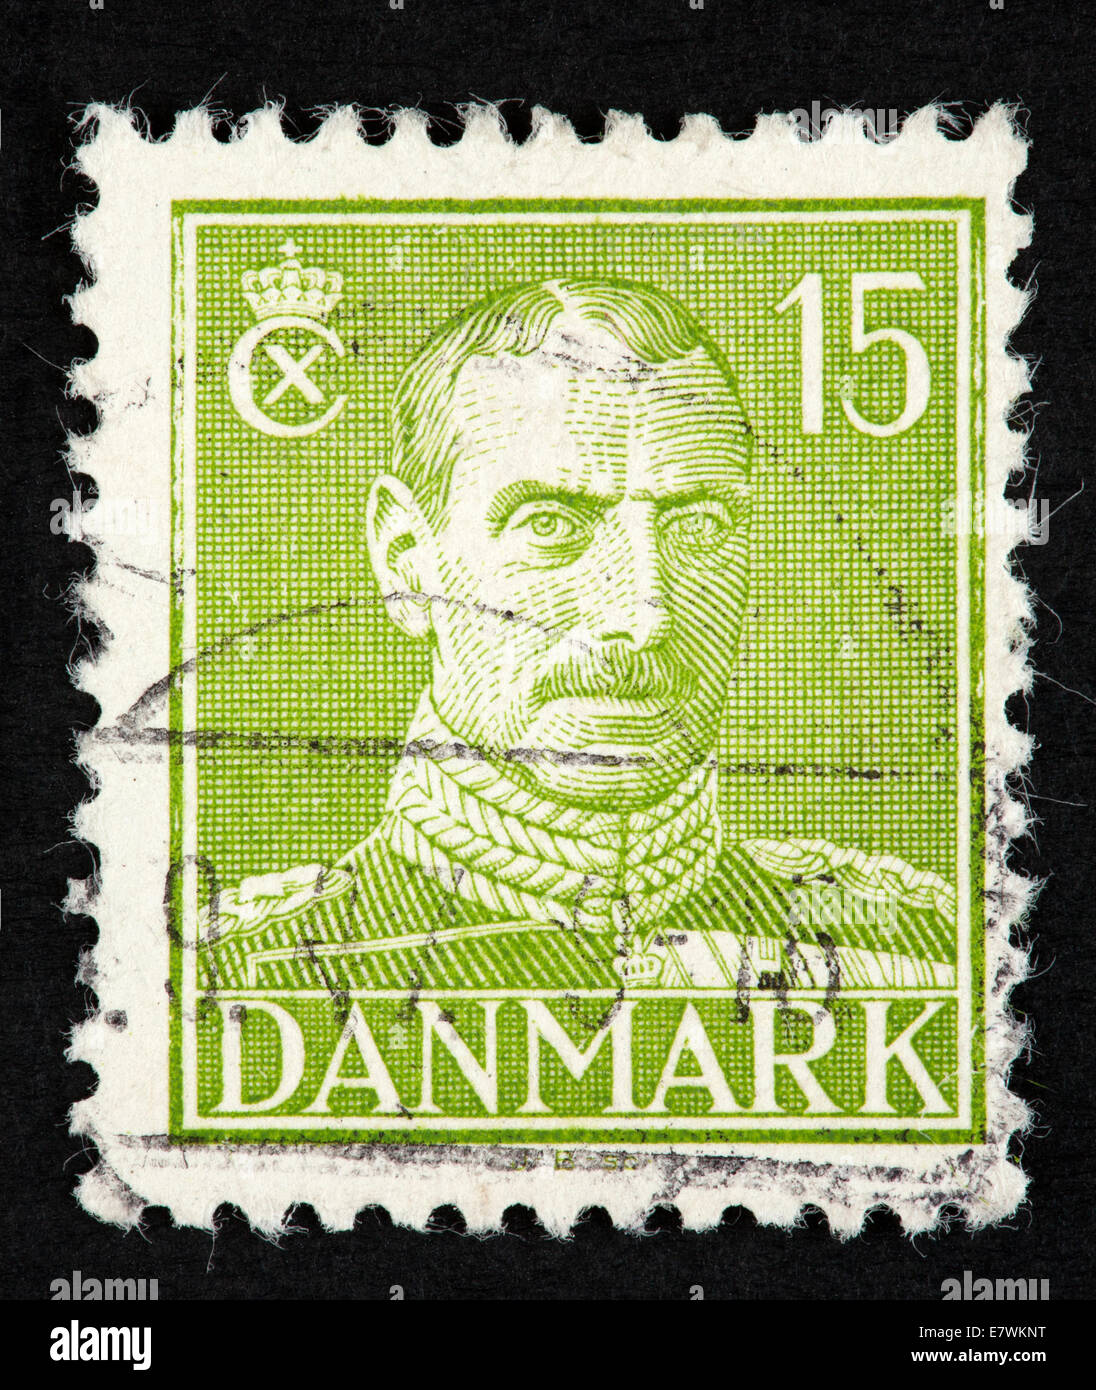 Danish postage stamp Stock Photo